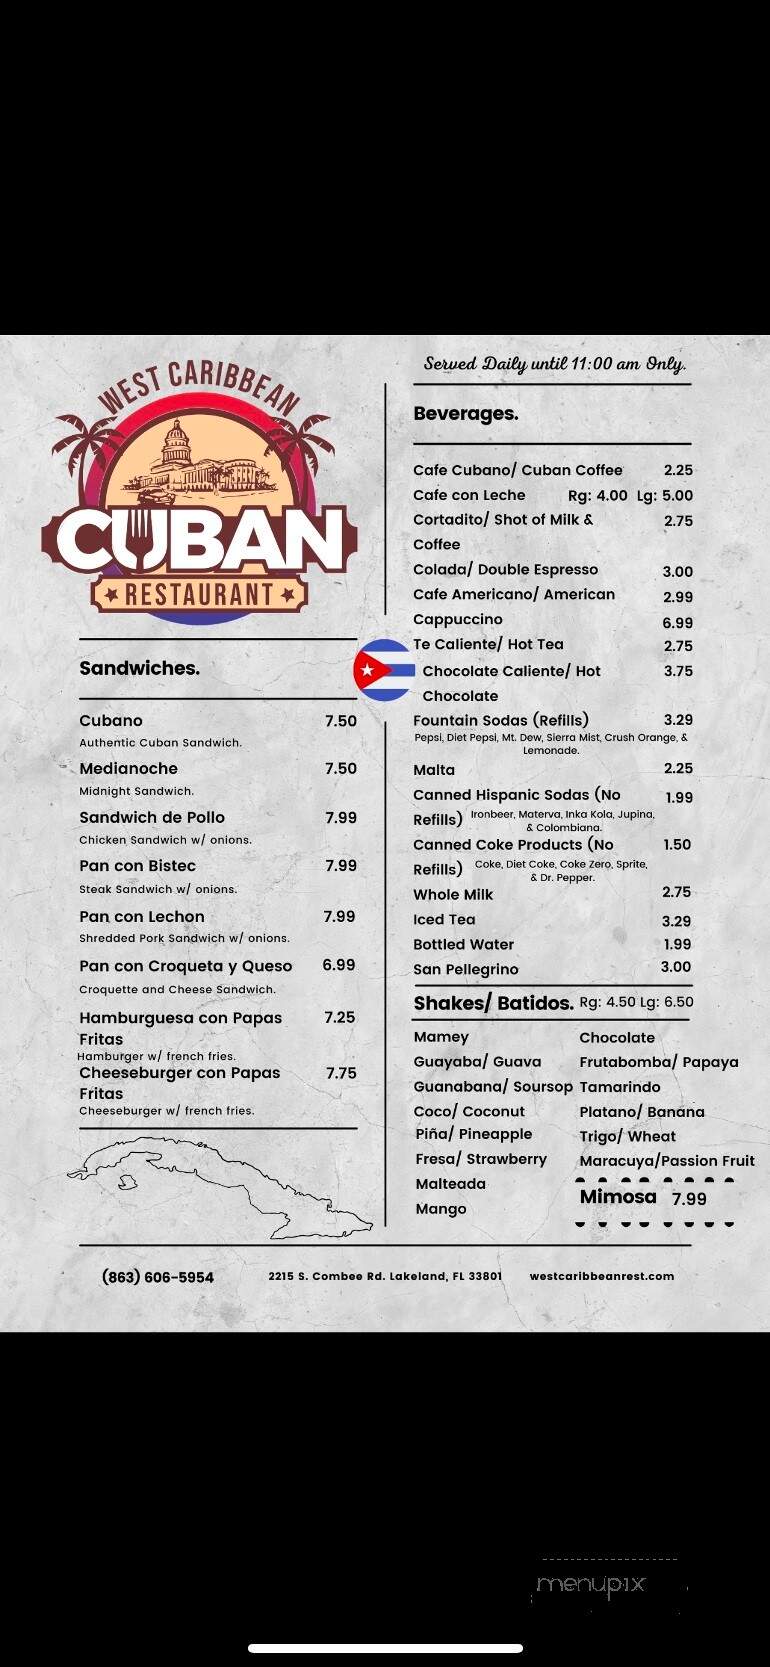 west Caribbean cuban resturant - Lakeland, FL